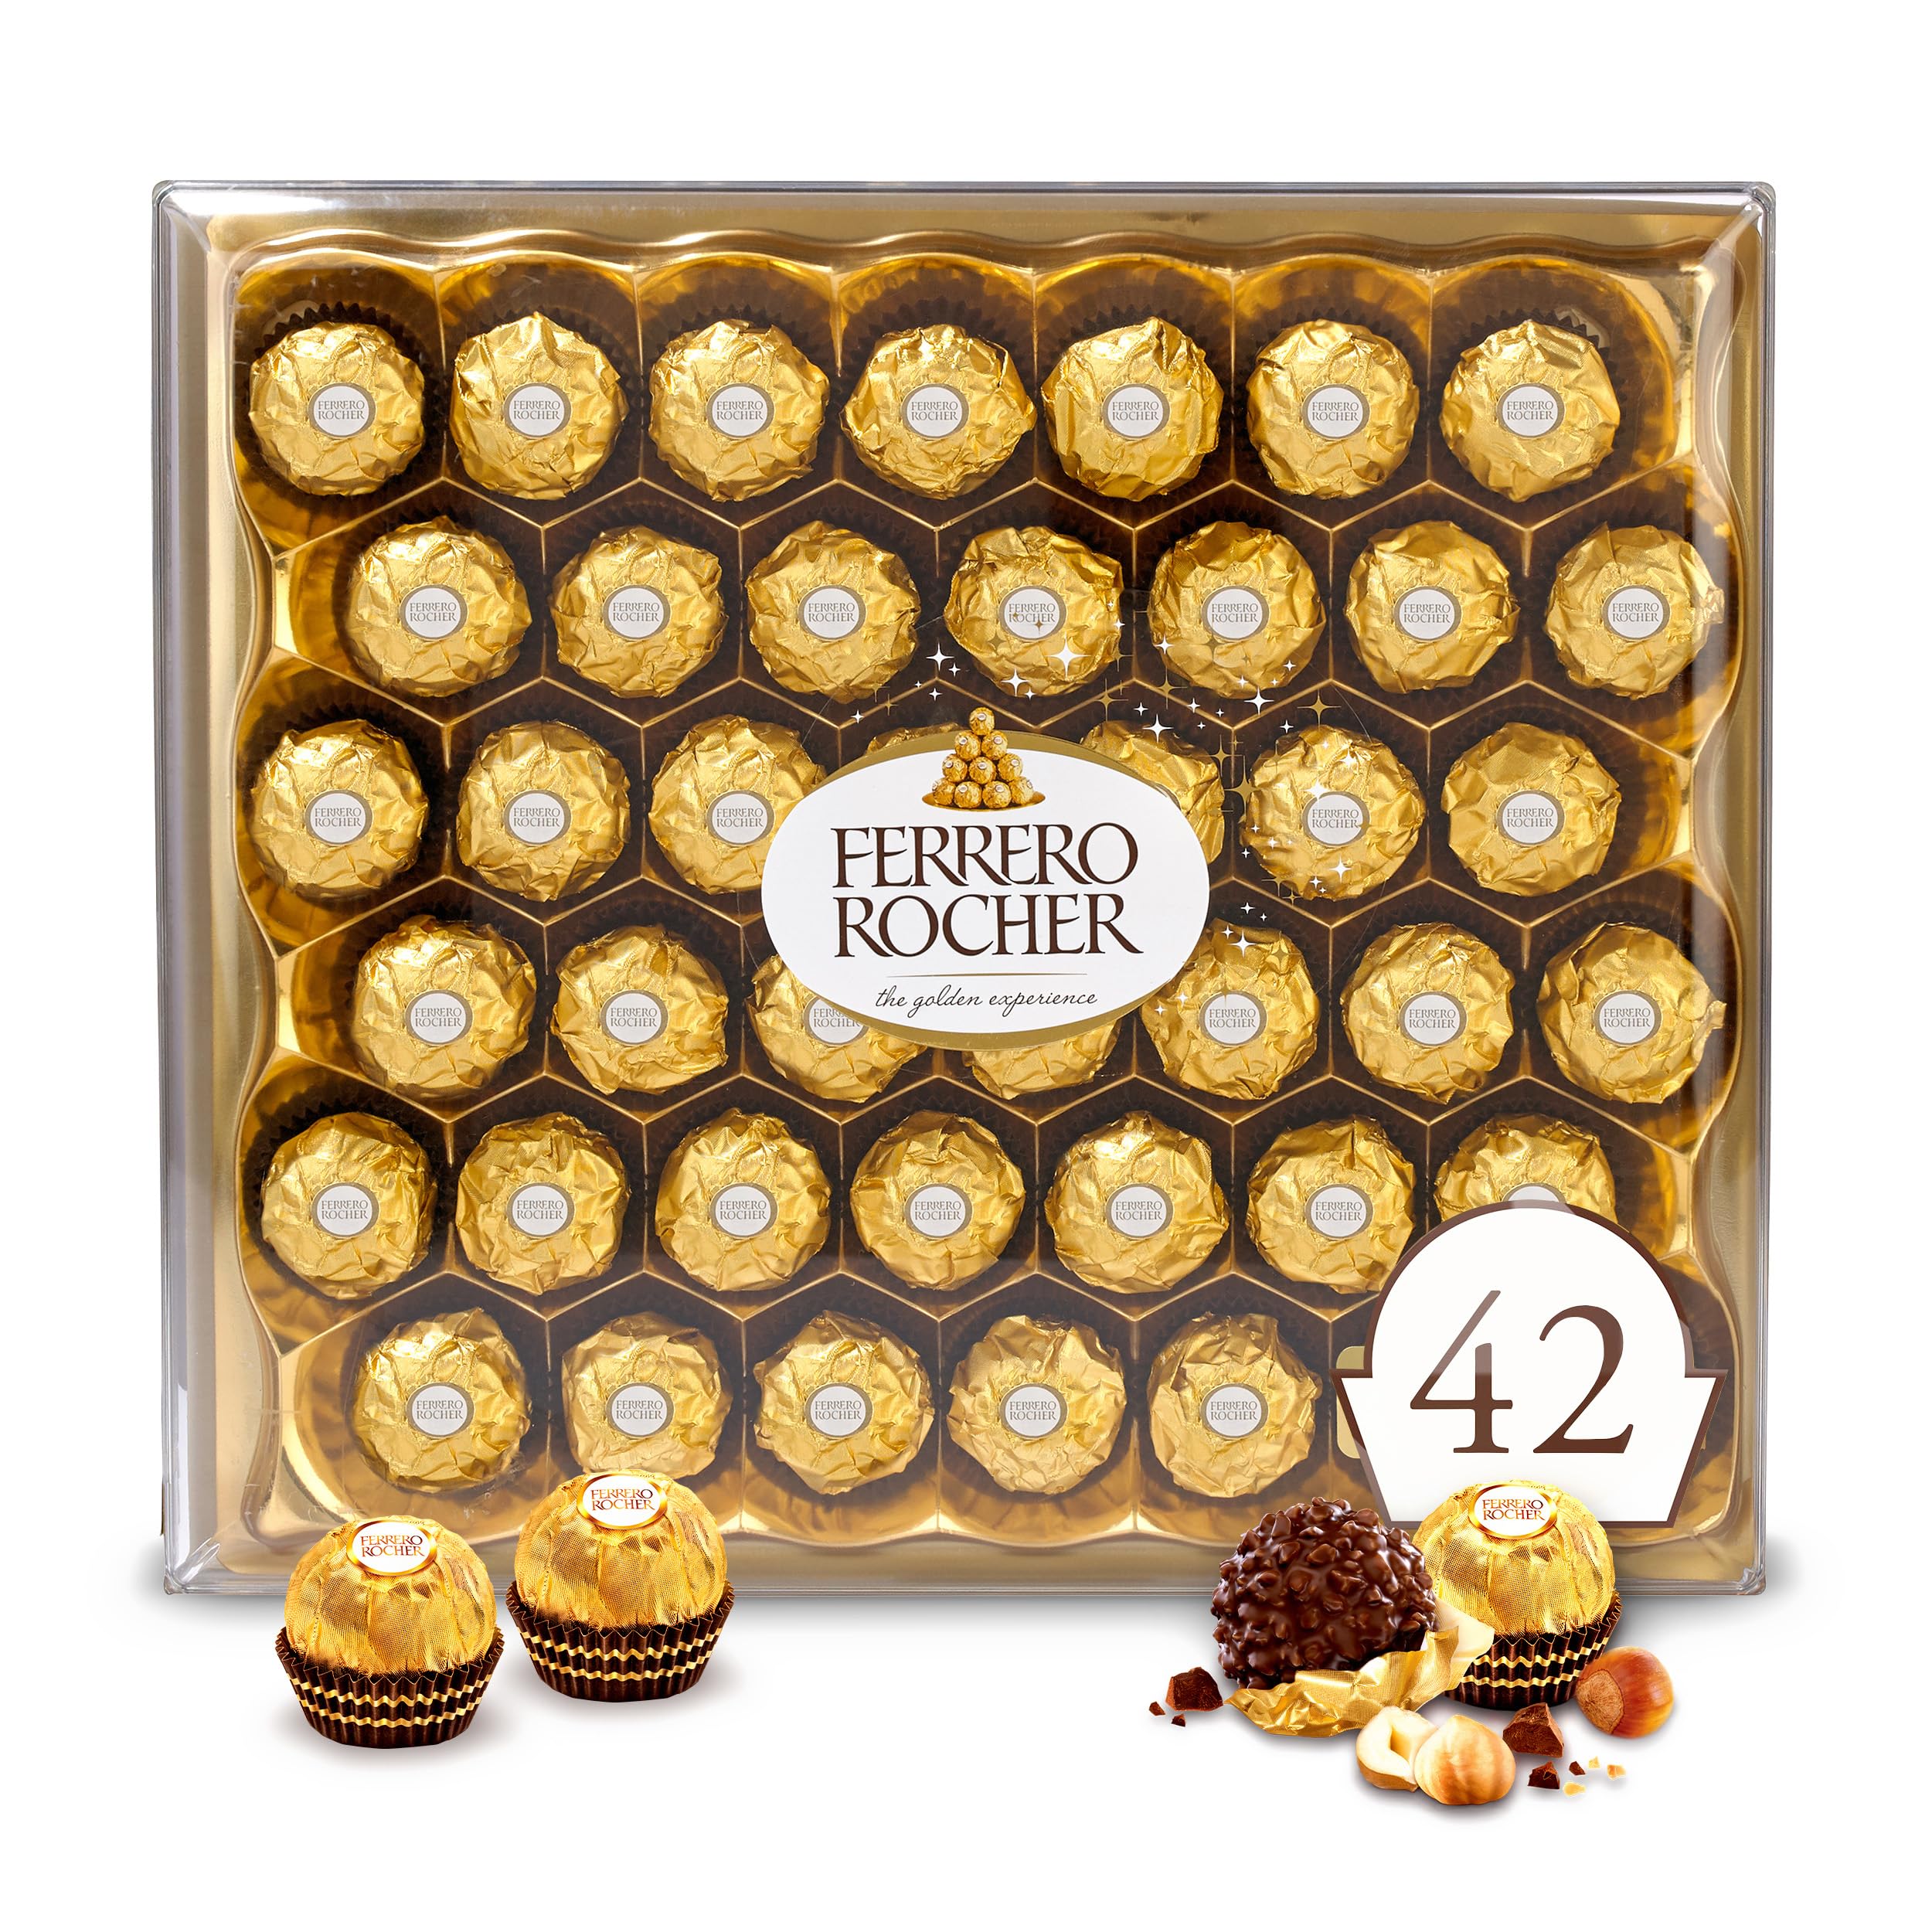 Ferrero Rocher, 42 Count, Gourmet Milk Chocolate Hazelnut, Valentine's Chocolate, Individually Wrapped, 18.5 oz $12.46